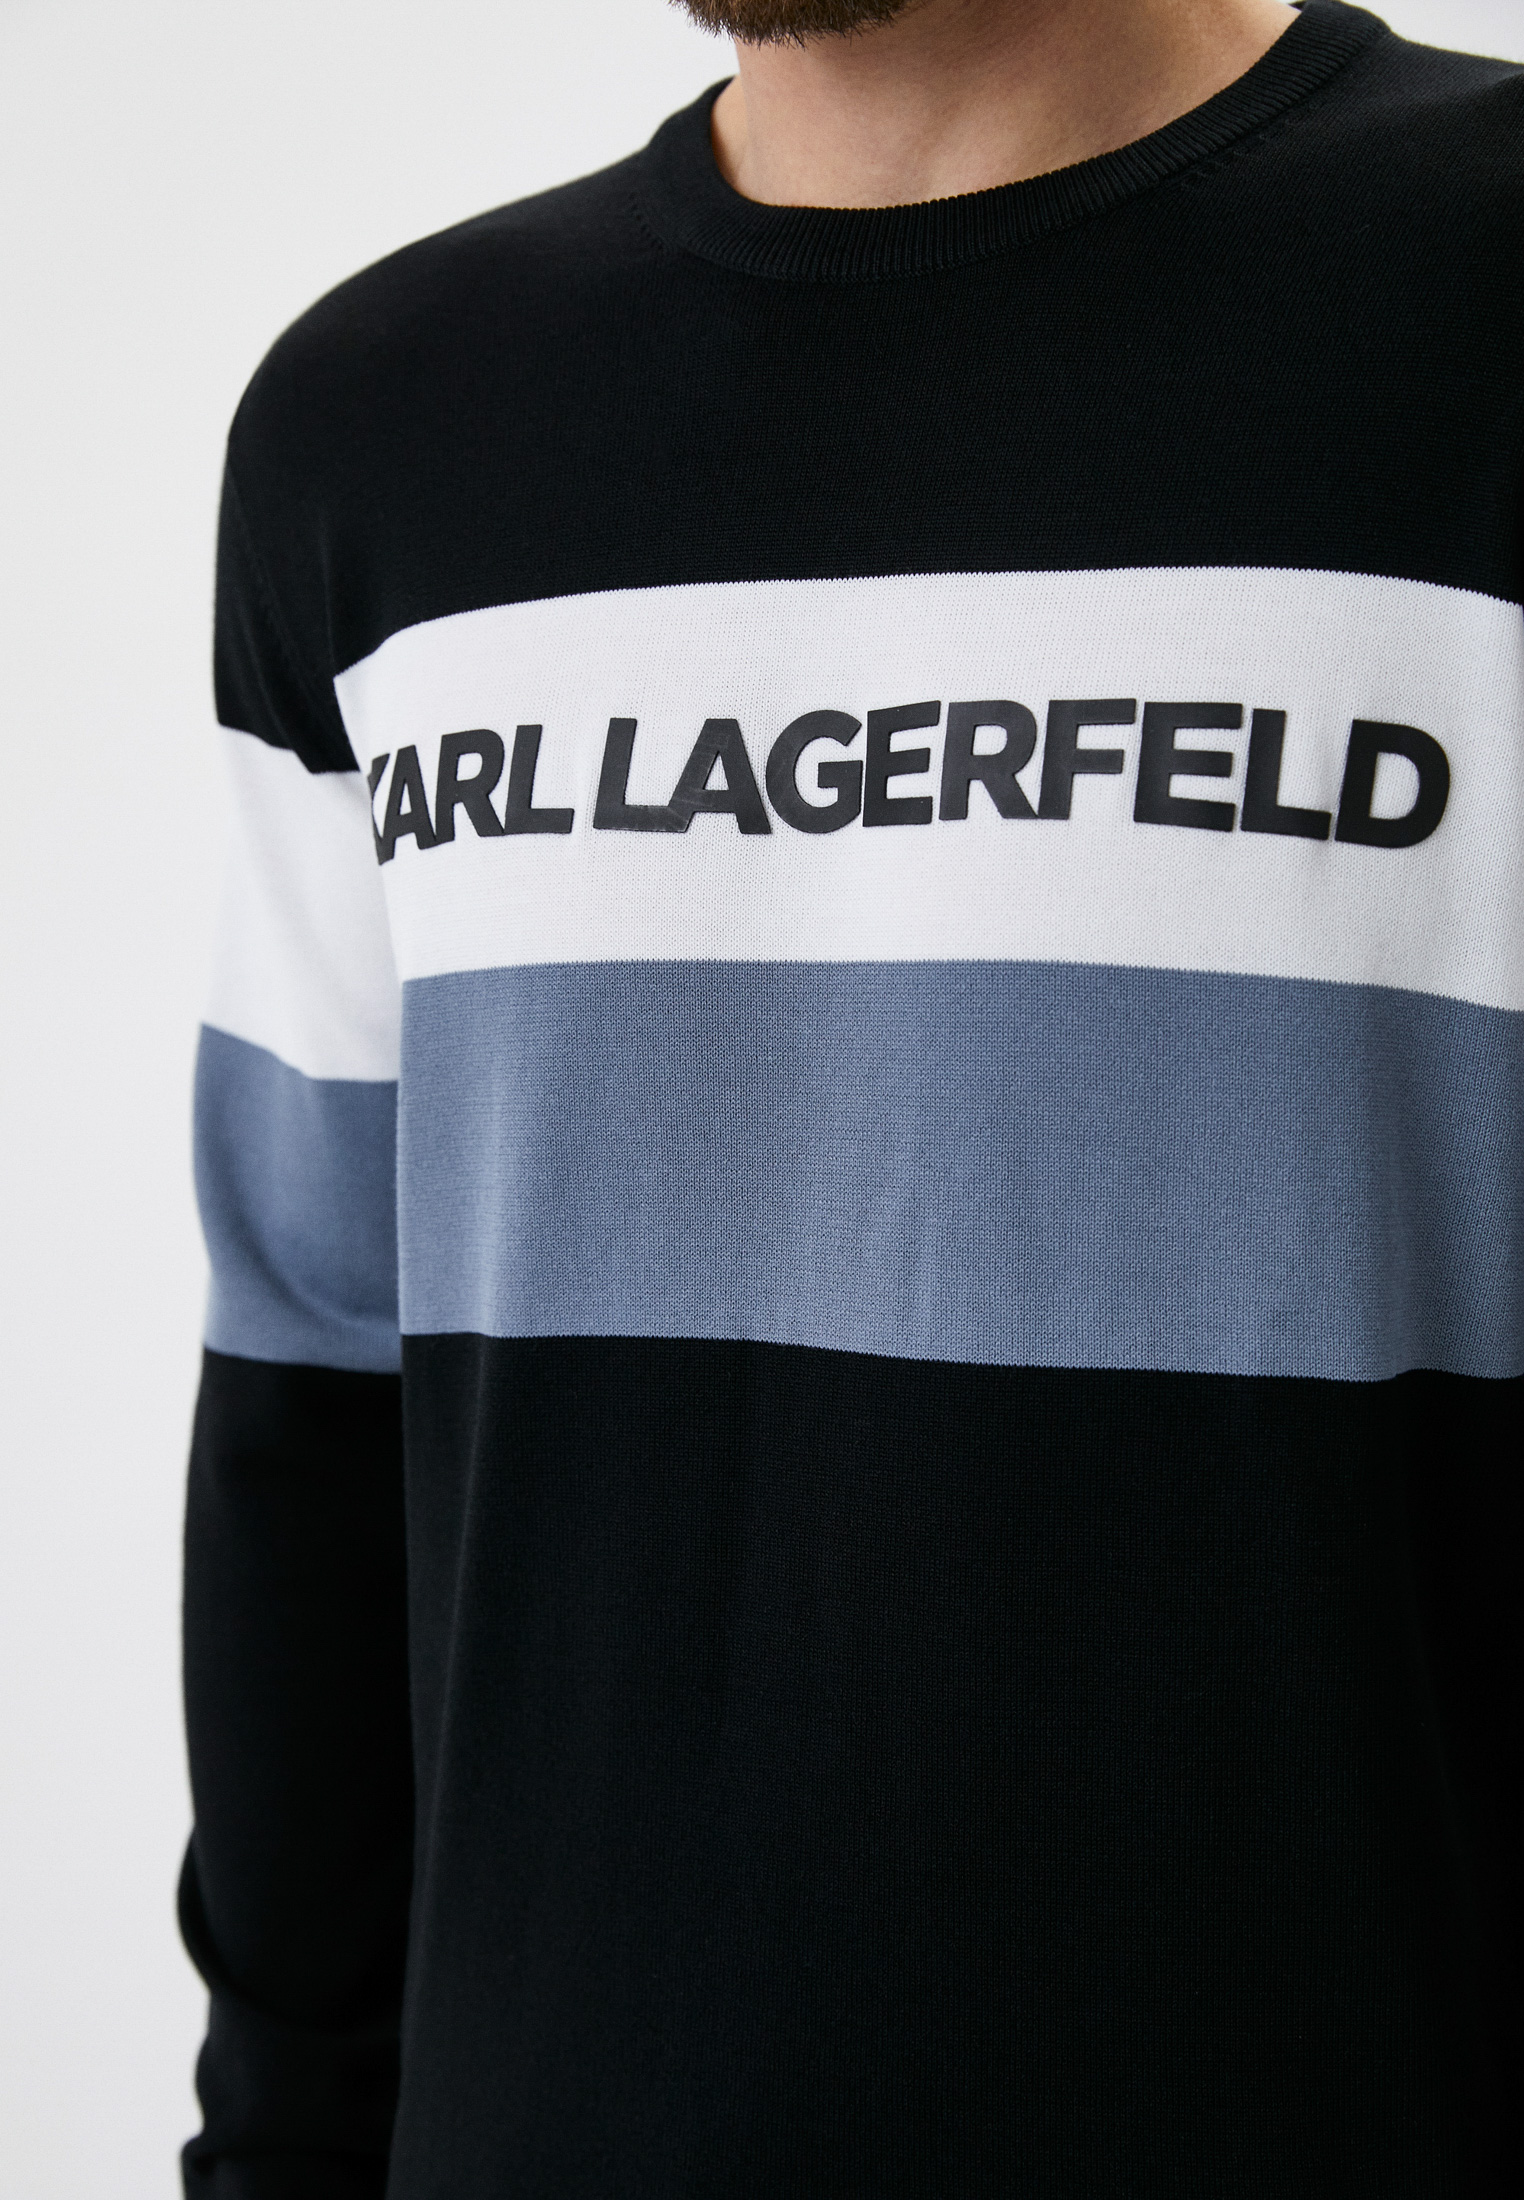 Джемпер Karl Lagerfeld (Карл Лагерфельд) 655080-523304: изображение 8